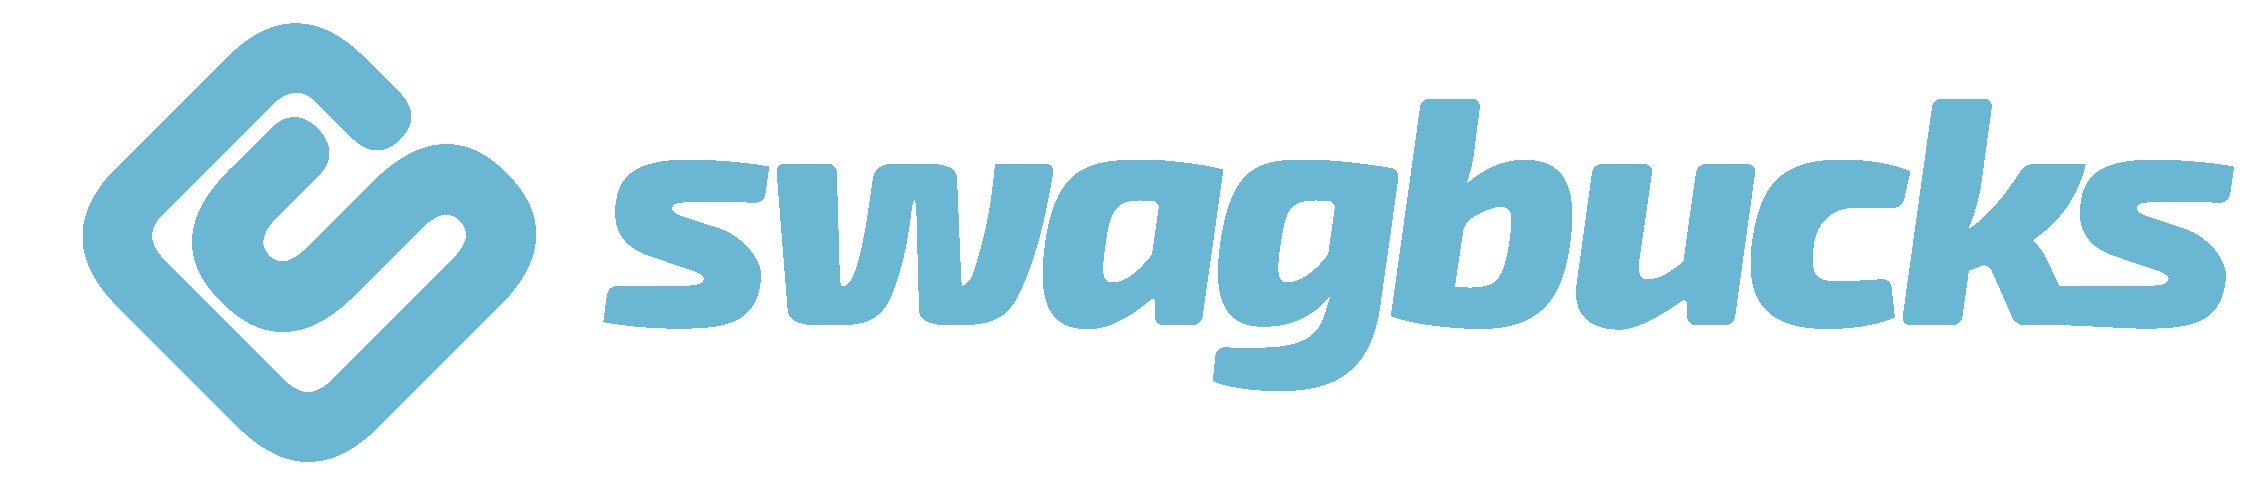 Swagbucks - logo